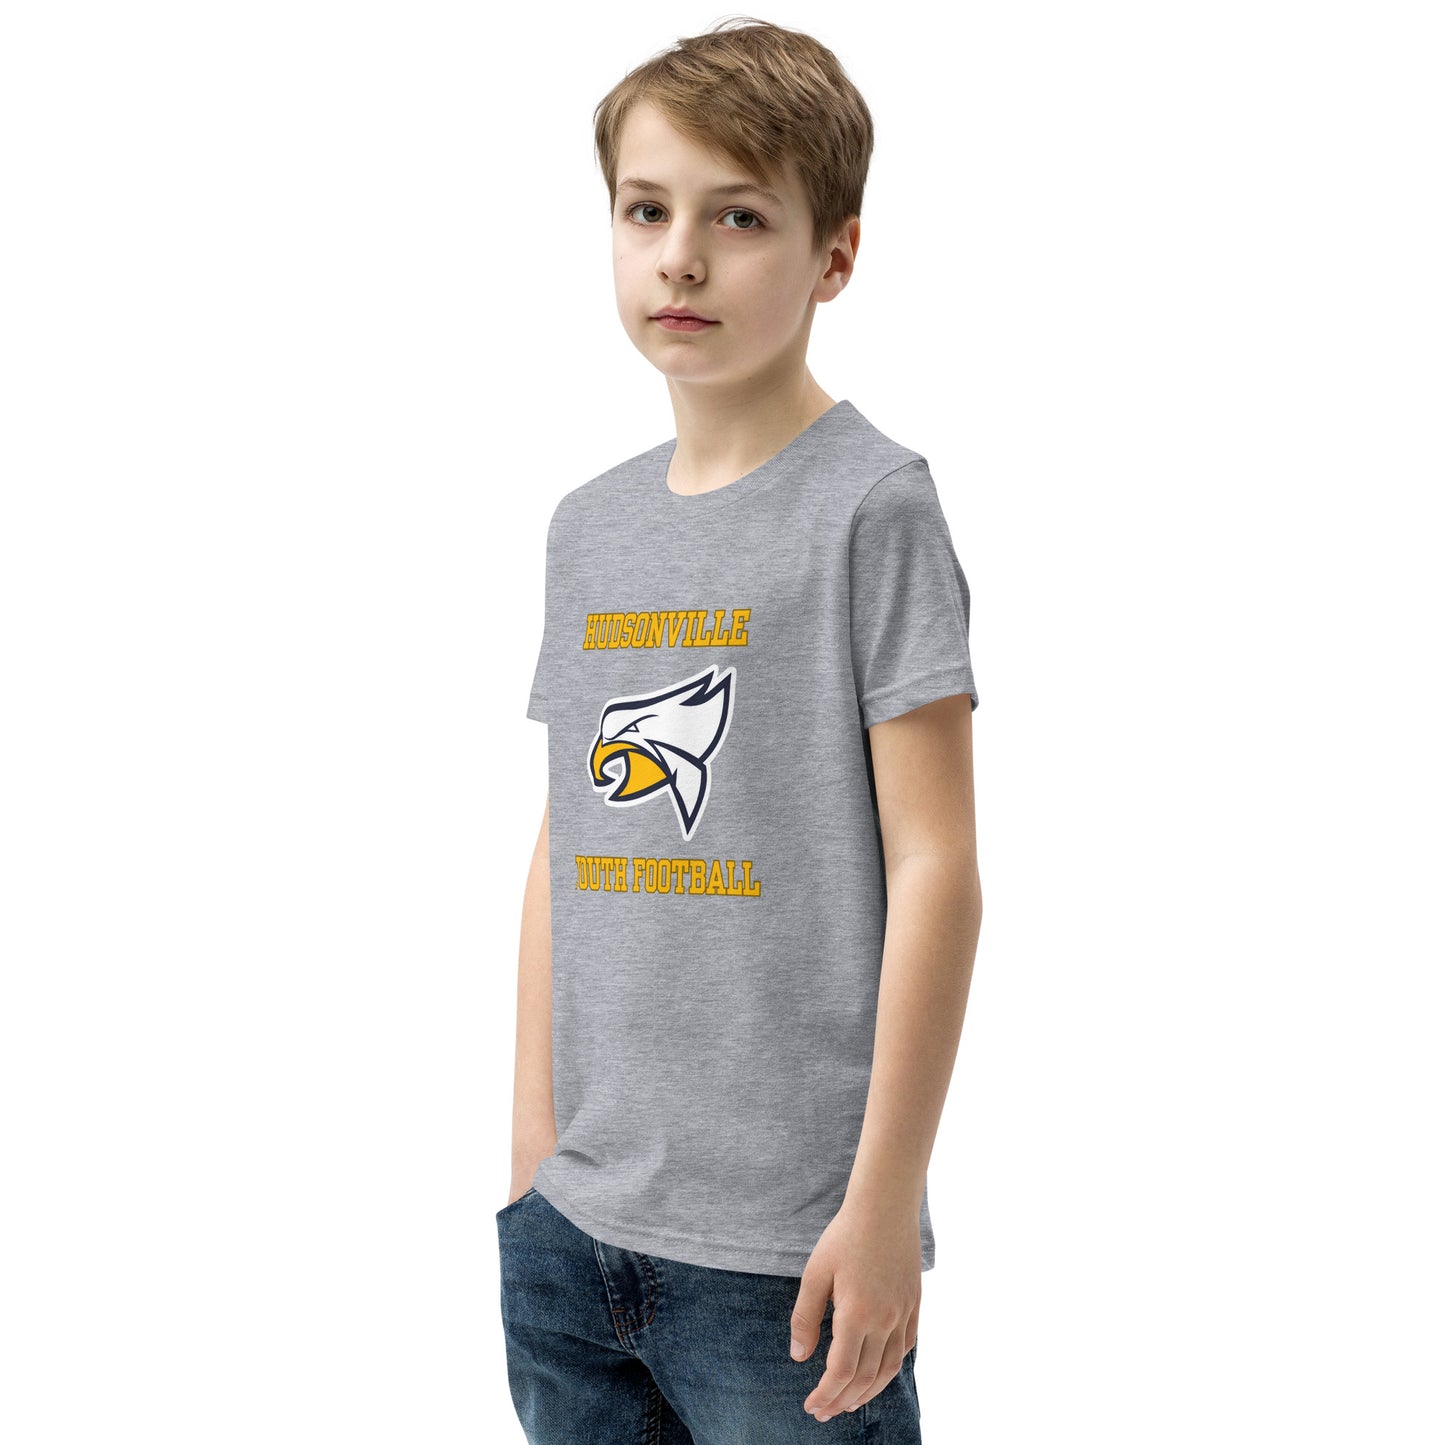 Hudsonville Youth Football Youth Short Sleeve T-Shirt